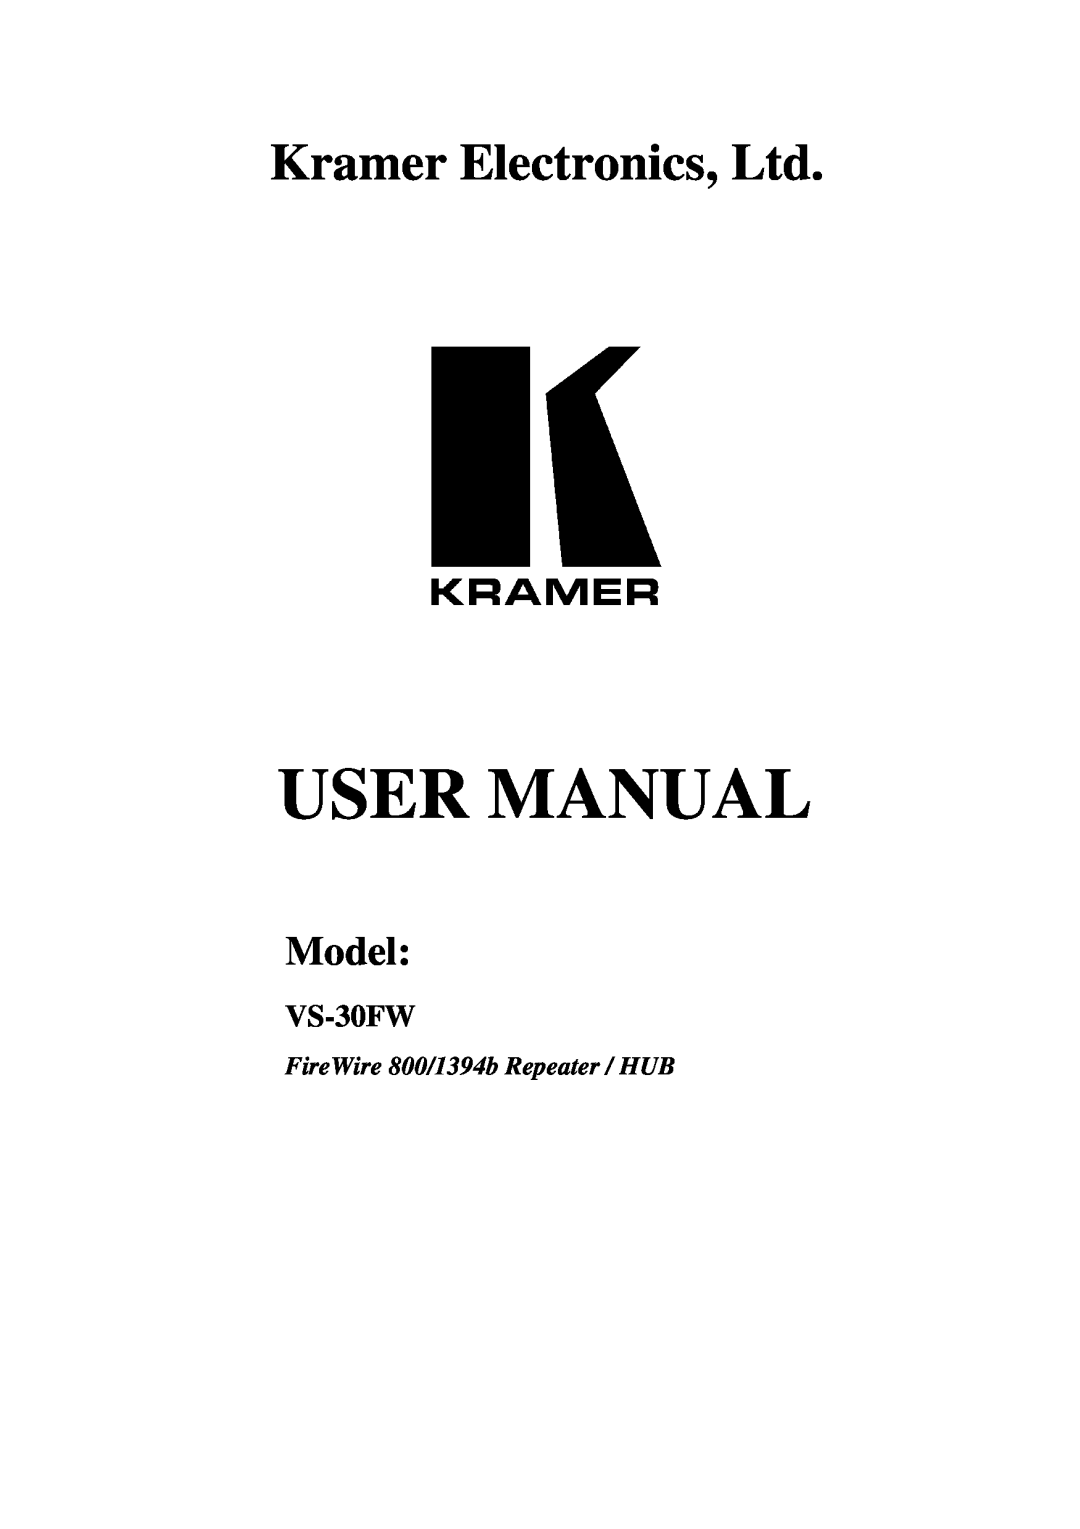 Kramer Electronics VS-30FW user manual User Manual, Model, FireWire 800/1394b Repeater / HUB 